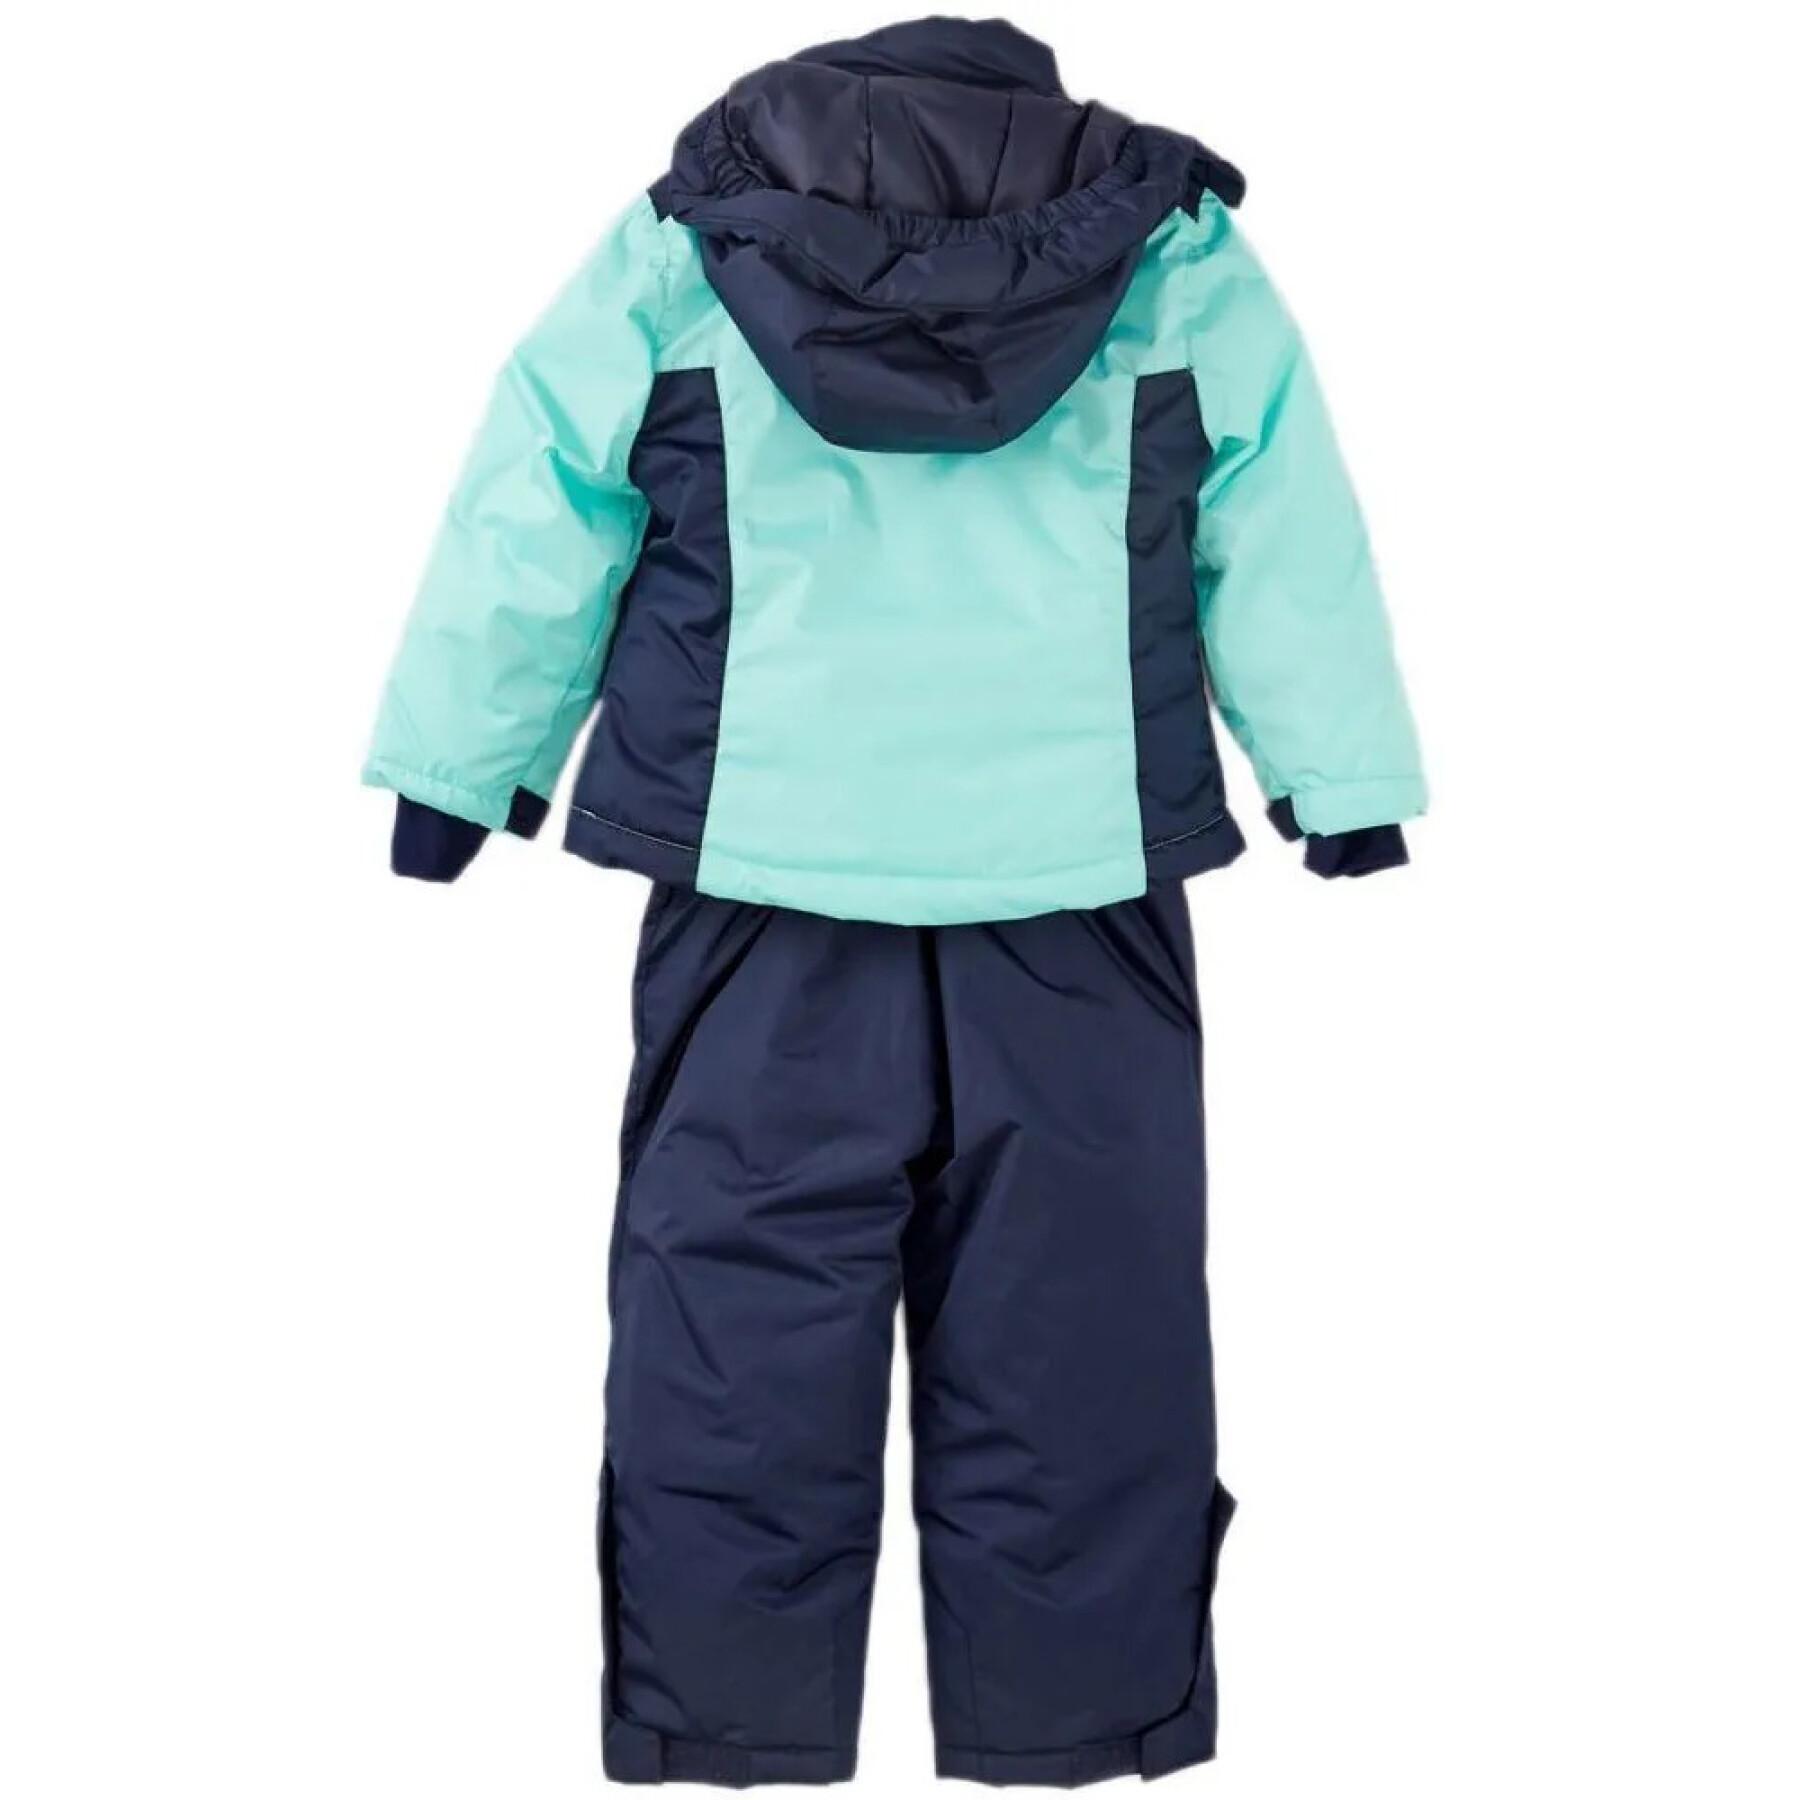 Ski suit for girls Peak Mountain Fanae